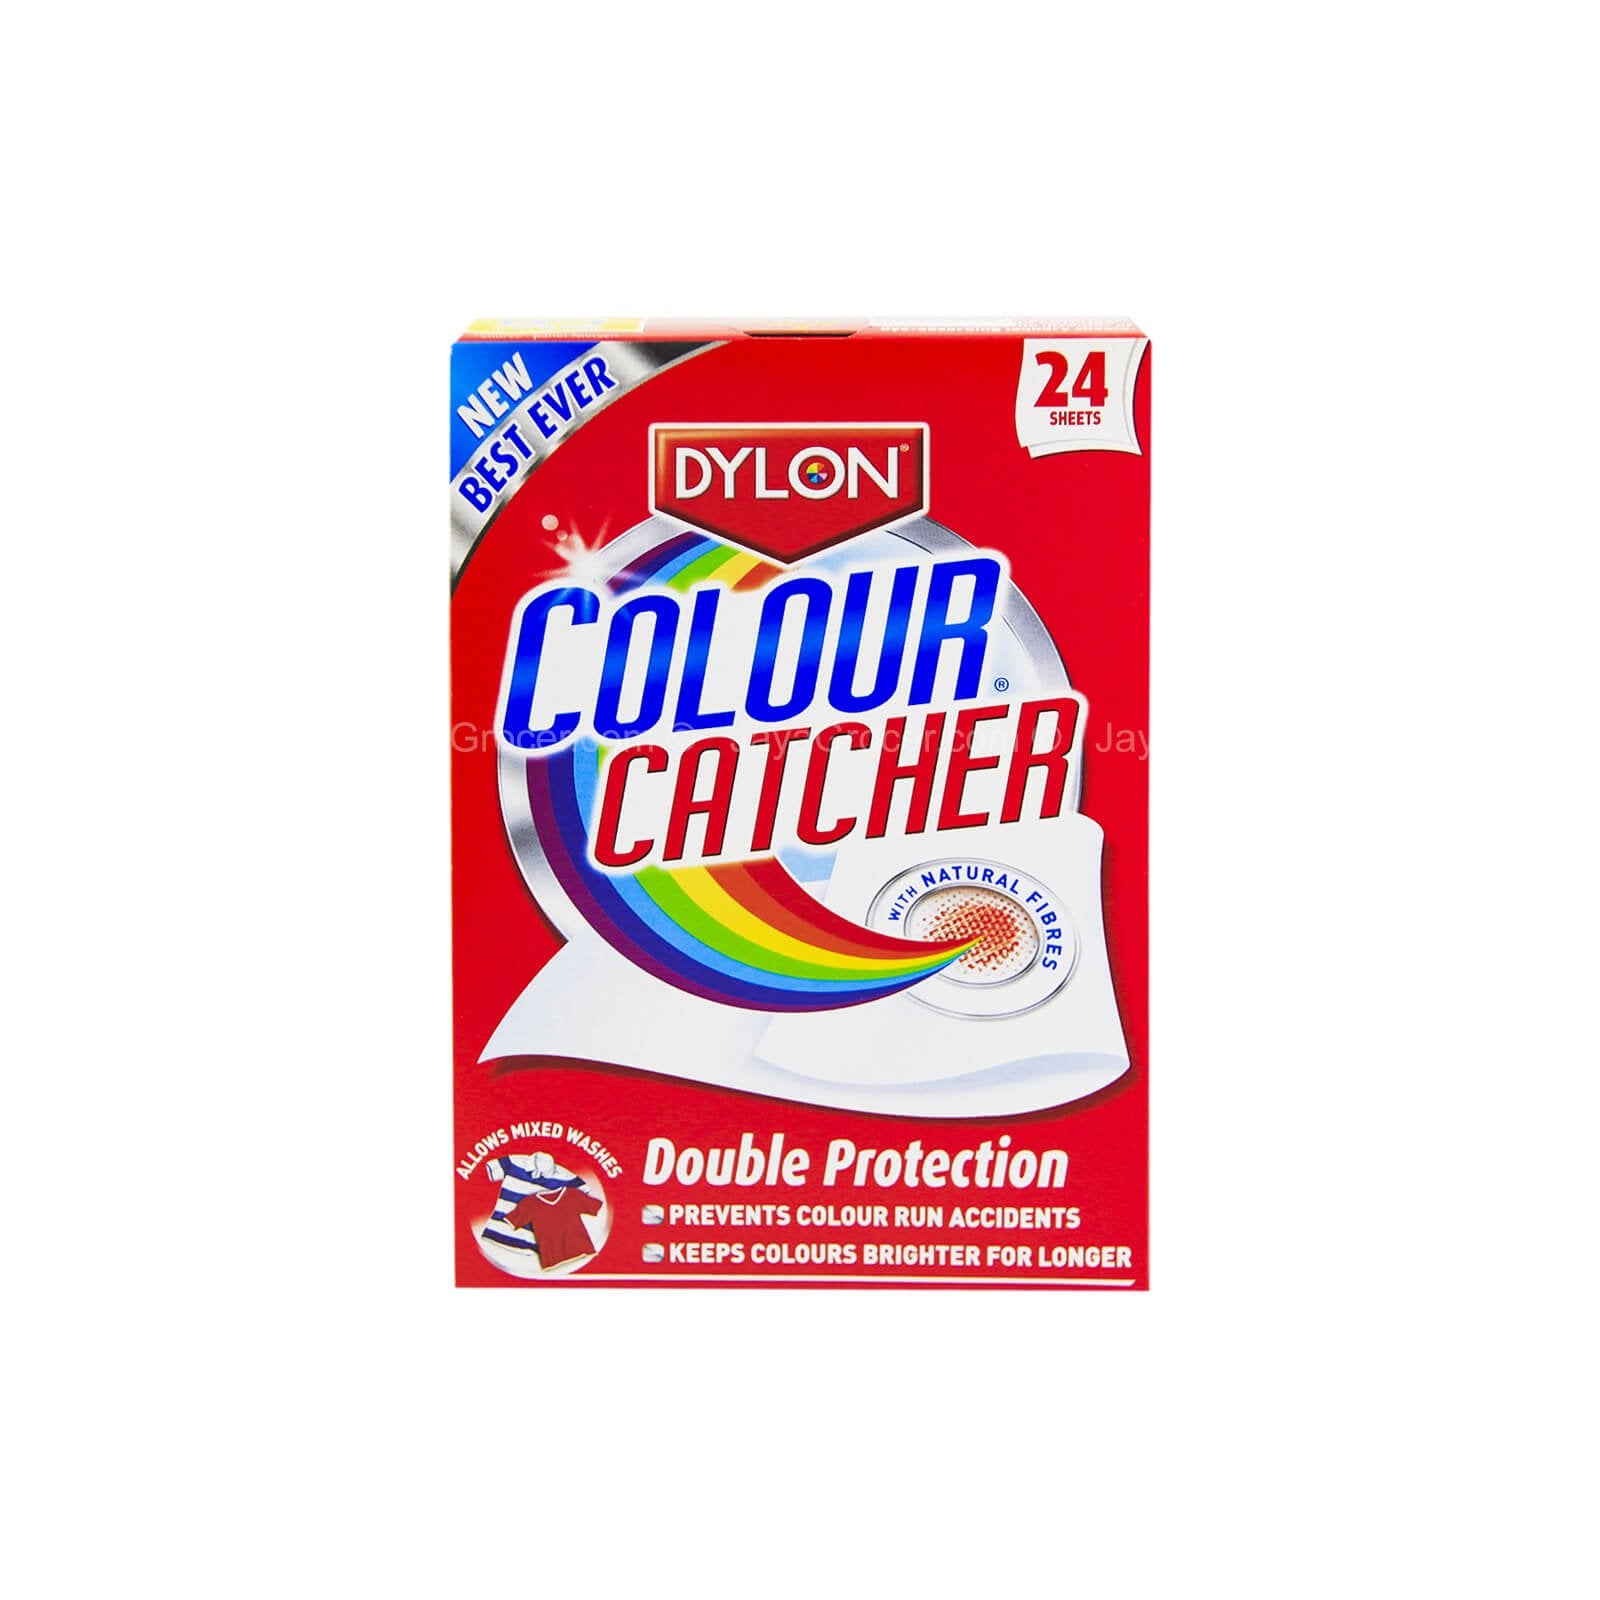 Dylon Colour Catcher Max Protect 8 Laundry Sheets